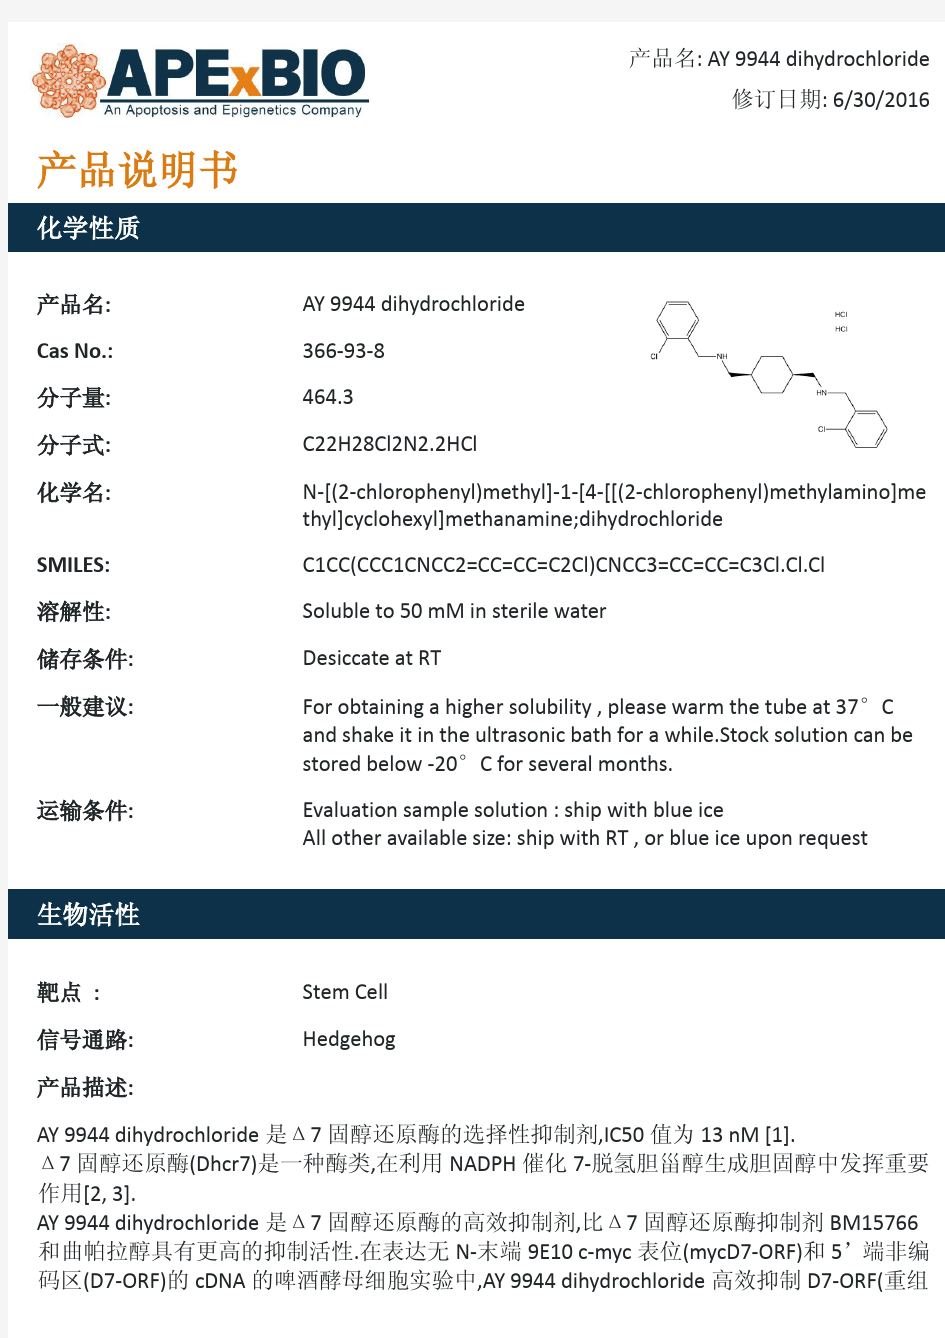 AY 9944 dihydrochloride_Δ7固醇还原酶抑制剂_366-93-8_Apexbio